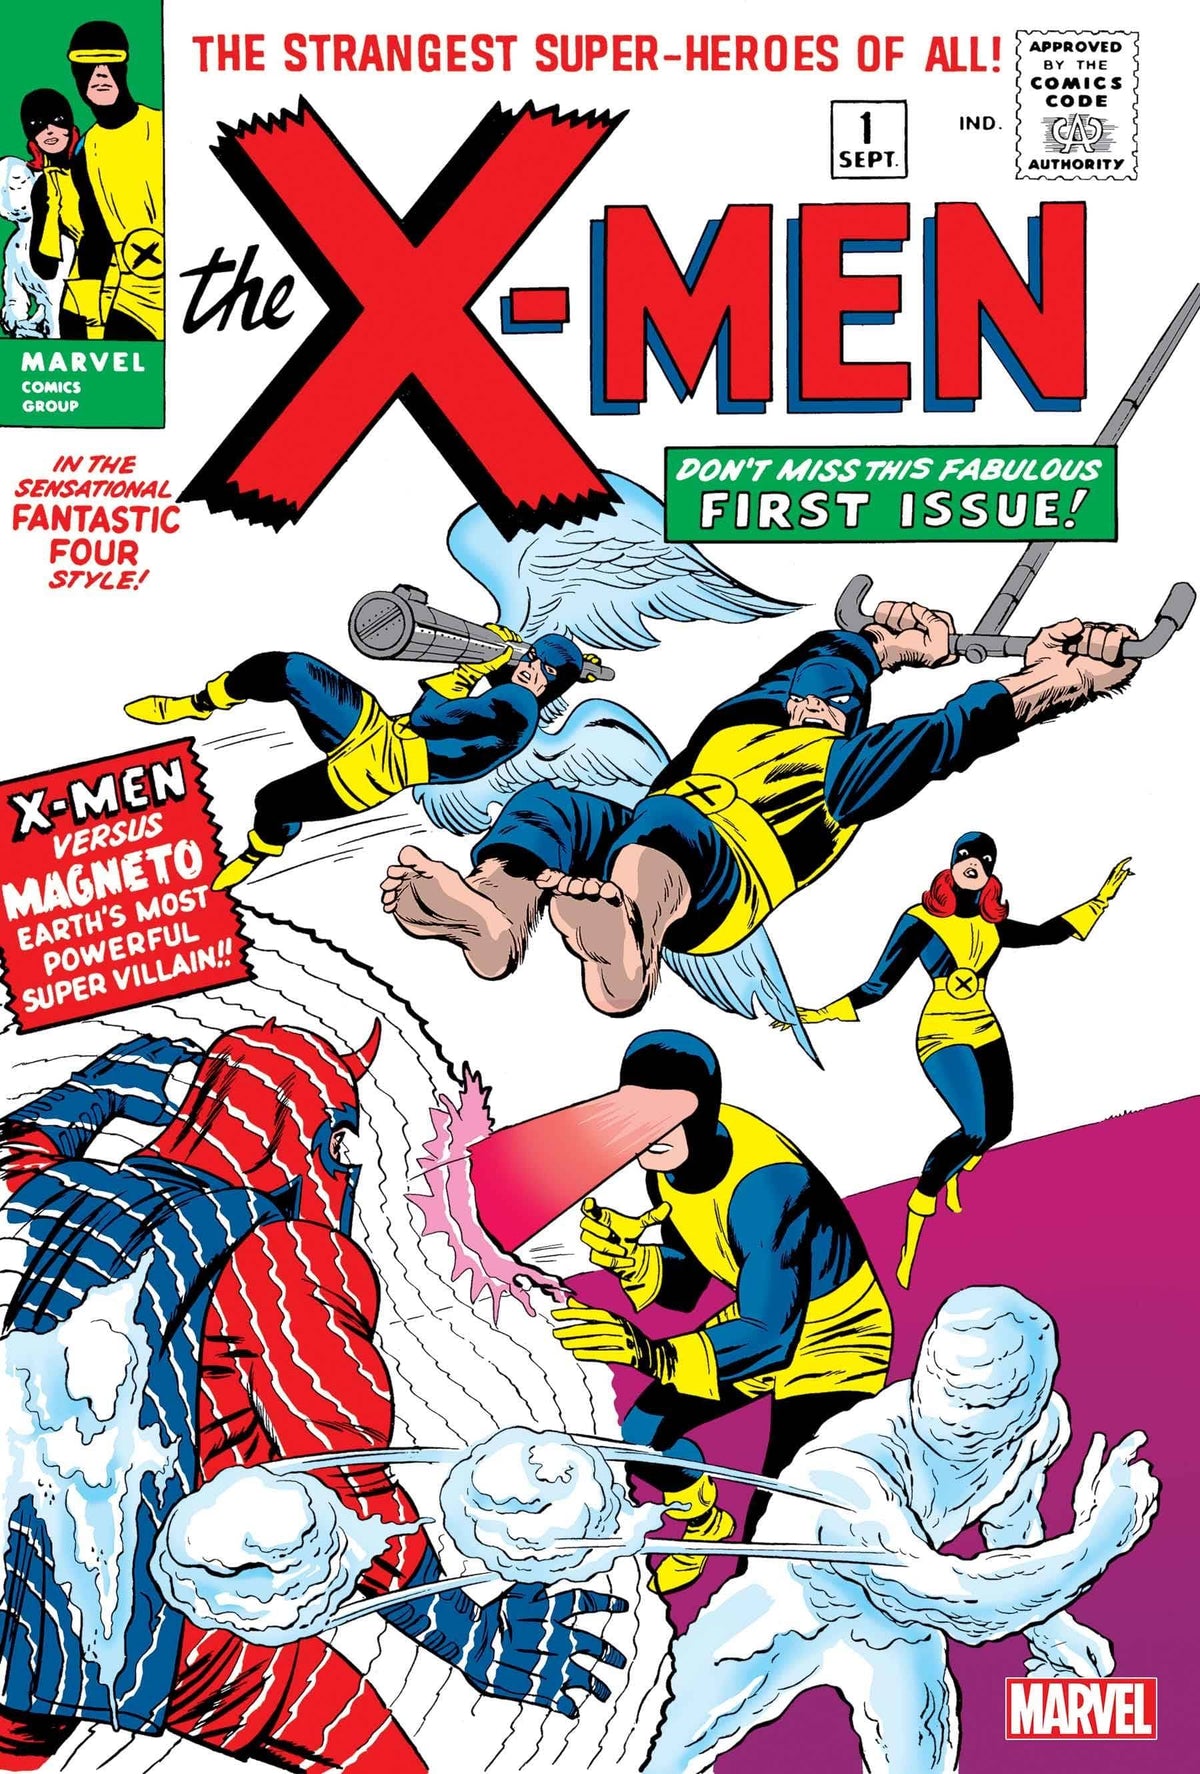 X-MEN 1963 #1 FACSIMILE EDITION NEW PTG - Third Eye